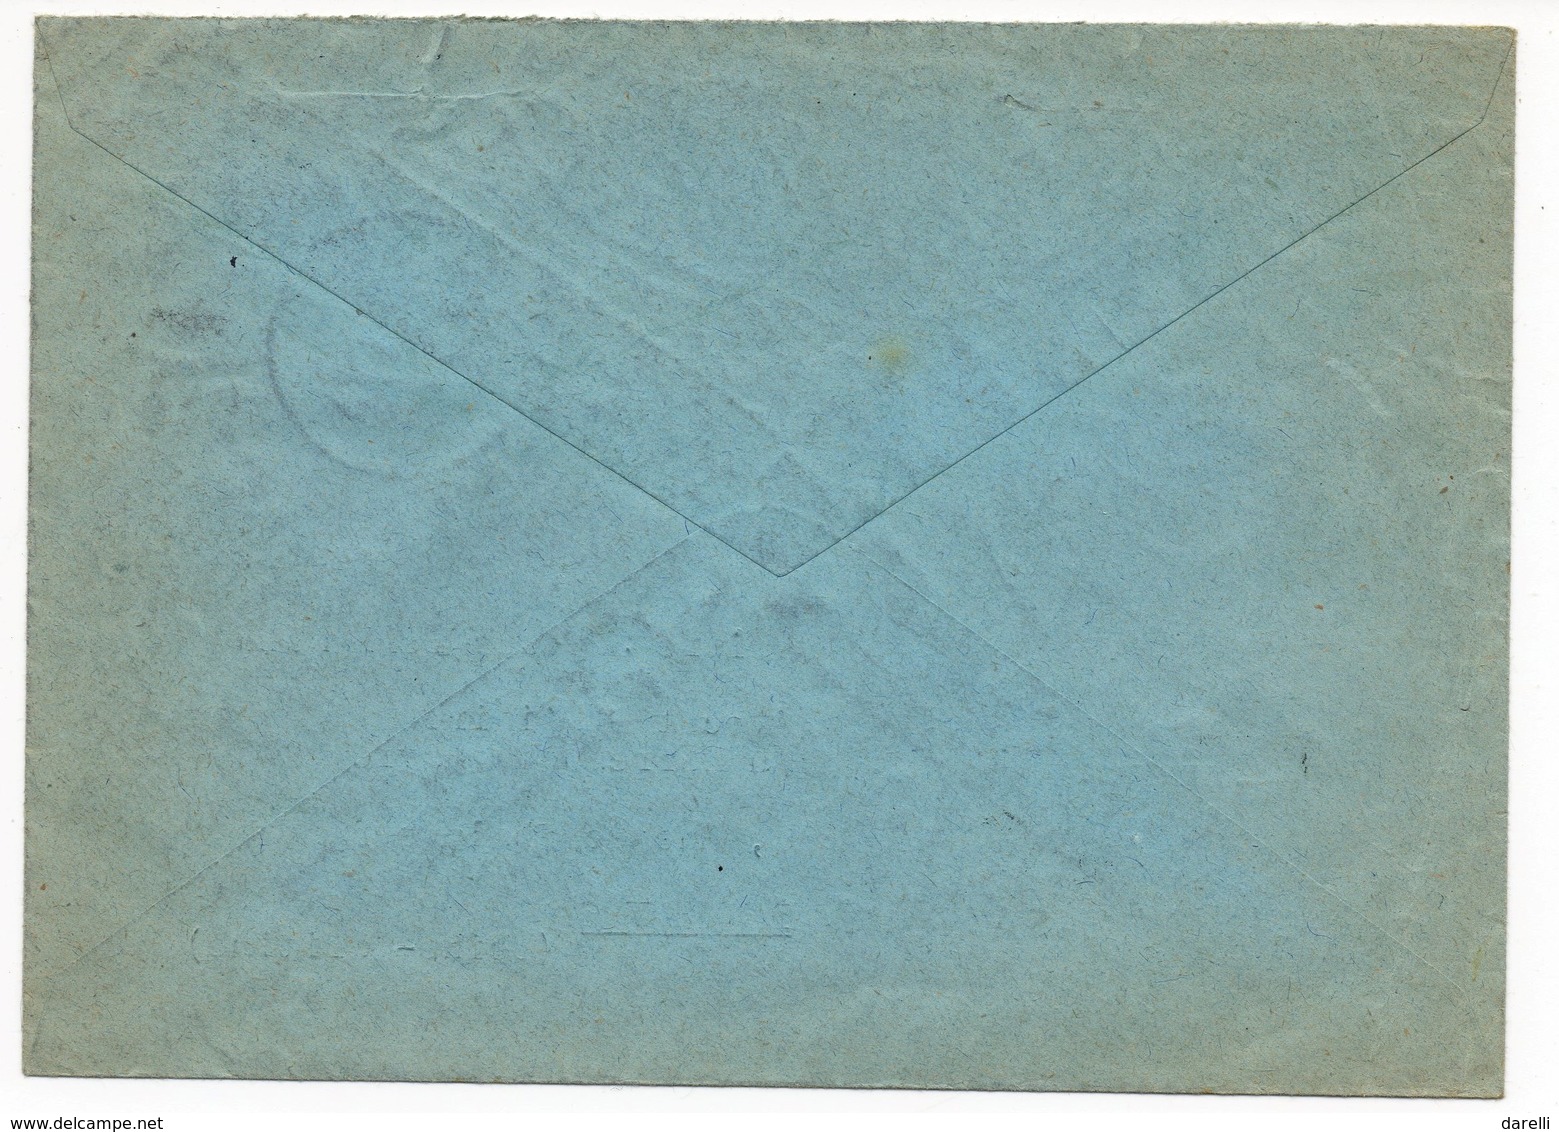 Enveloppe Homburg ( Hombourg,Hombursch)  Saar  De 1956 YT 337 - Covers & Documents